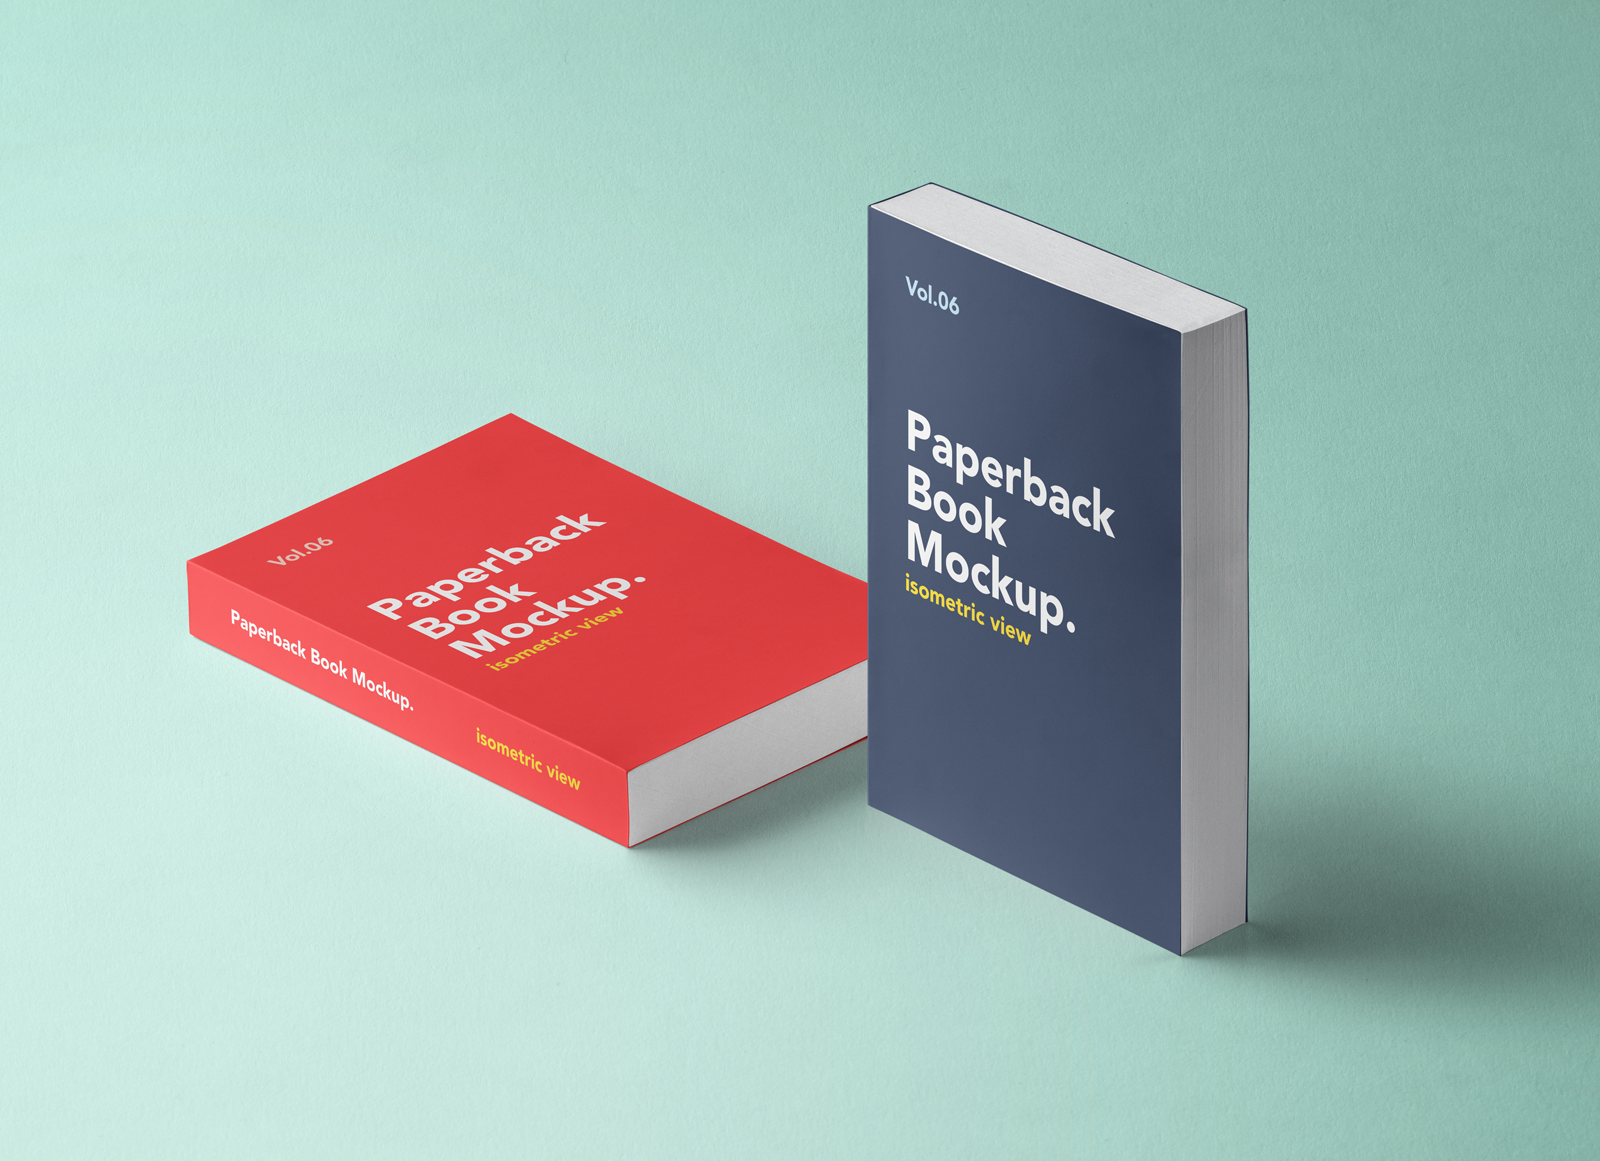 Download Free Paperback Book Mockup PSD - Good Mockups